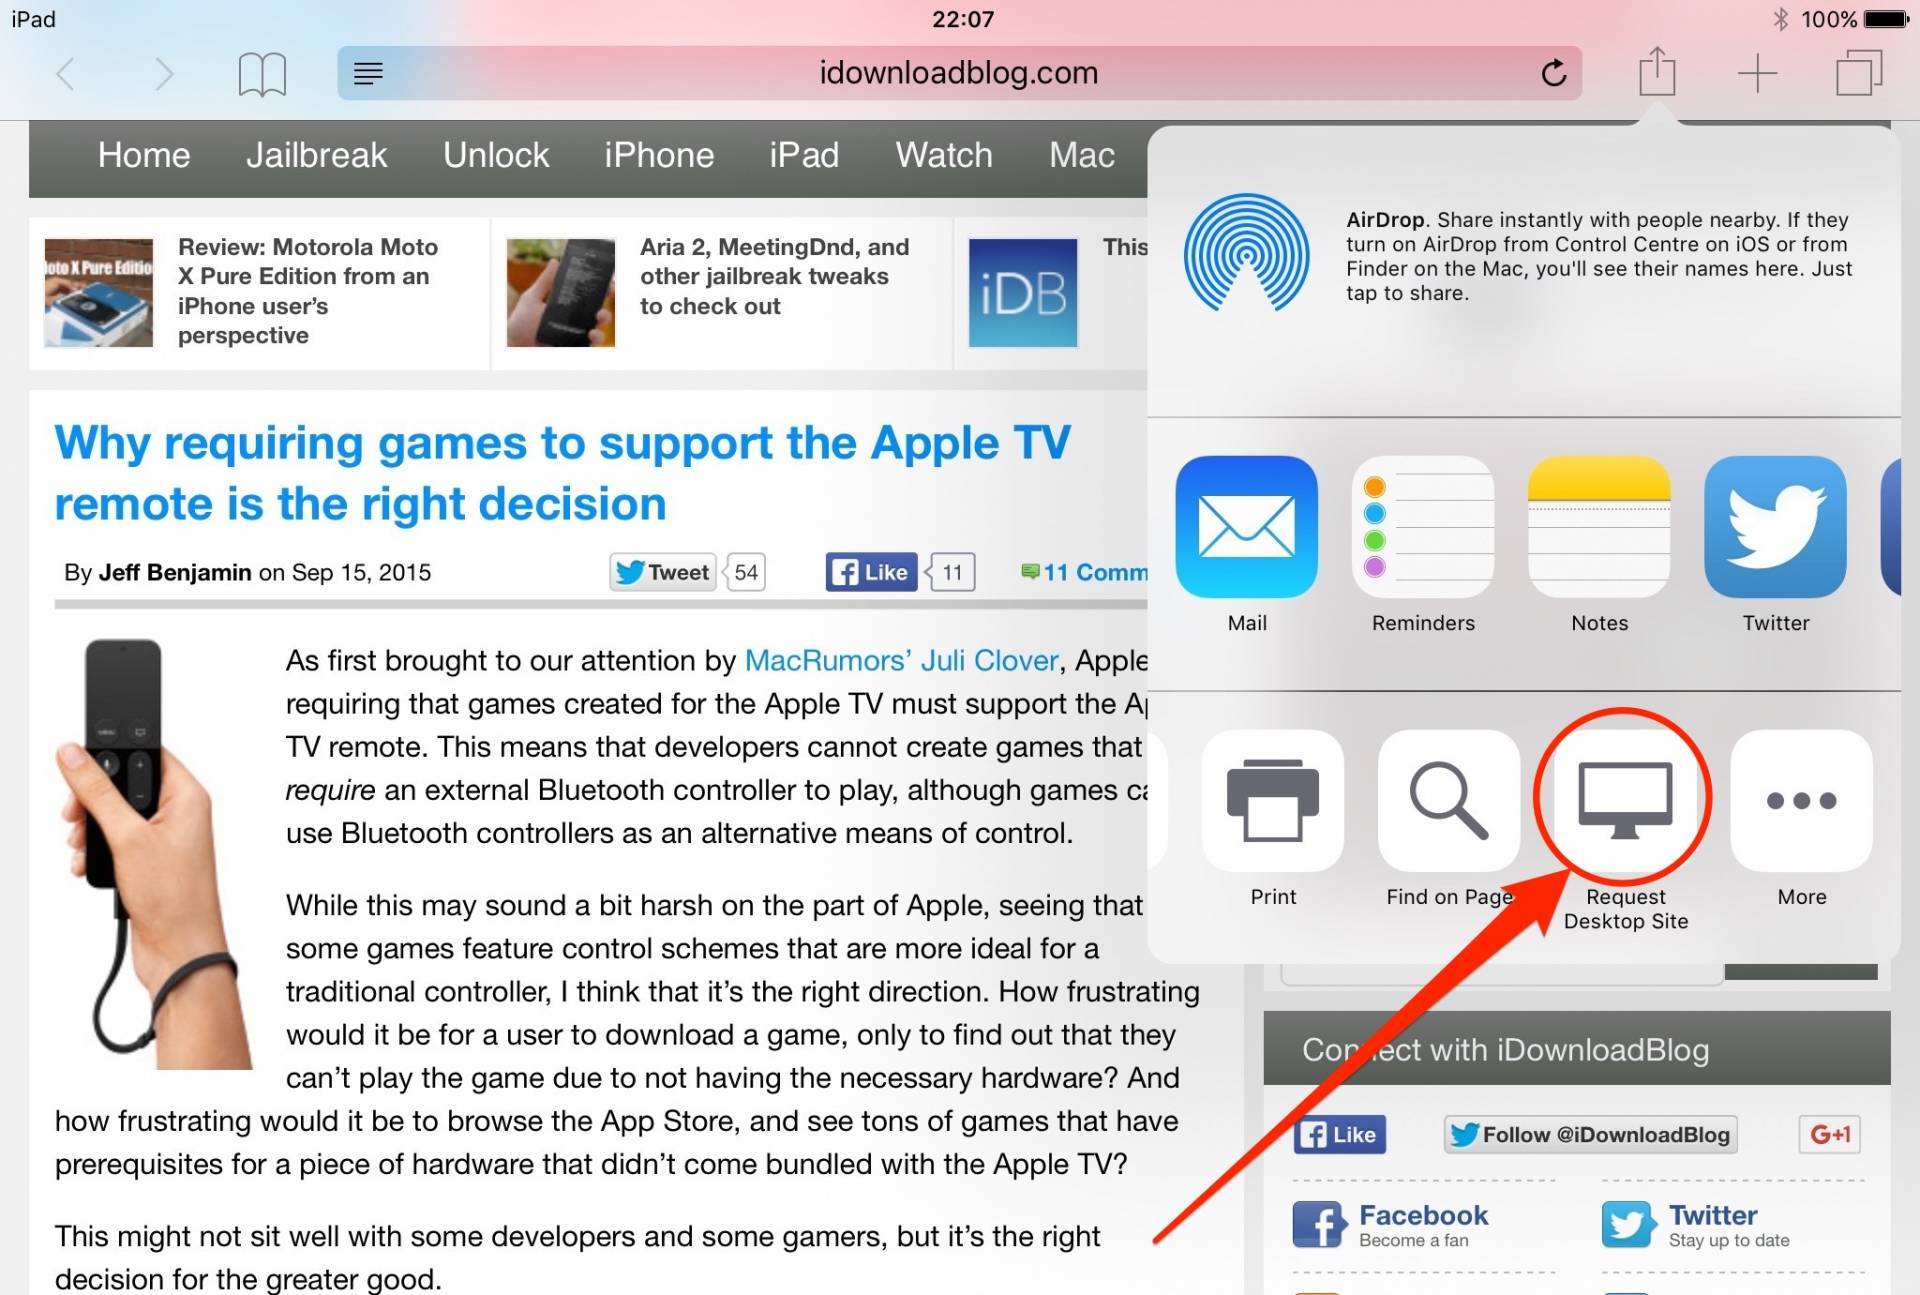 iOS-9-Request-Desktop-Site-iPad-screenshot-002